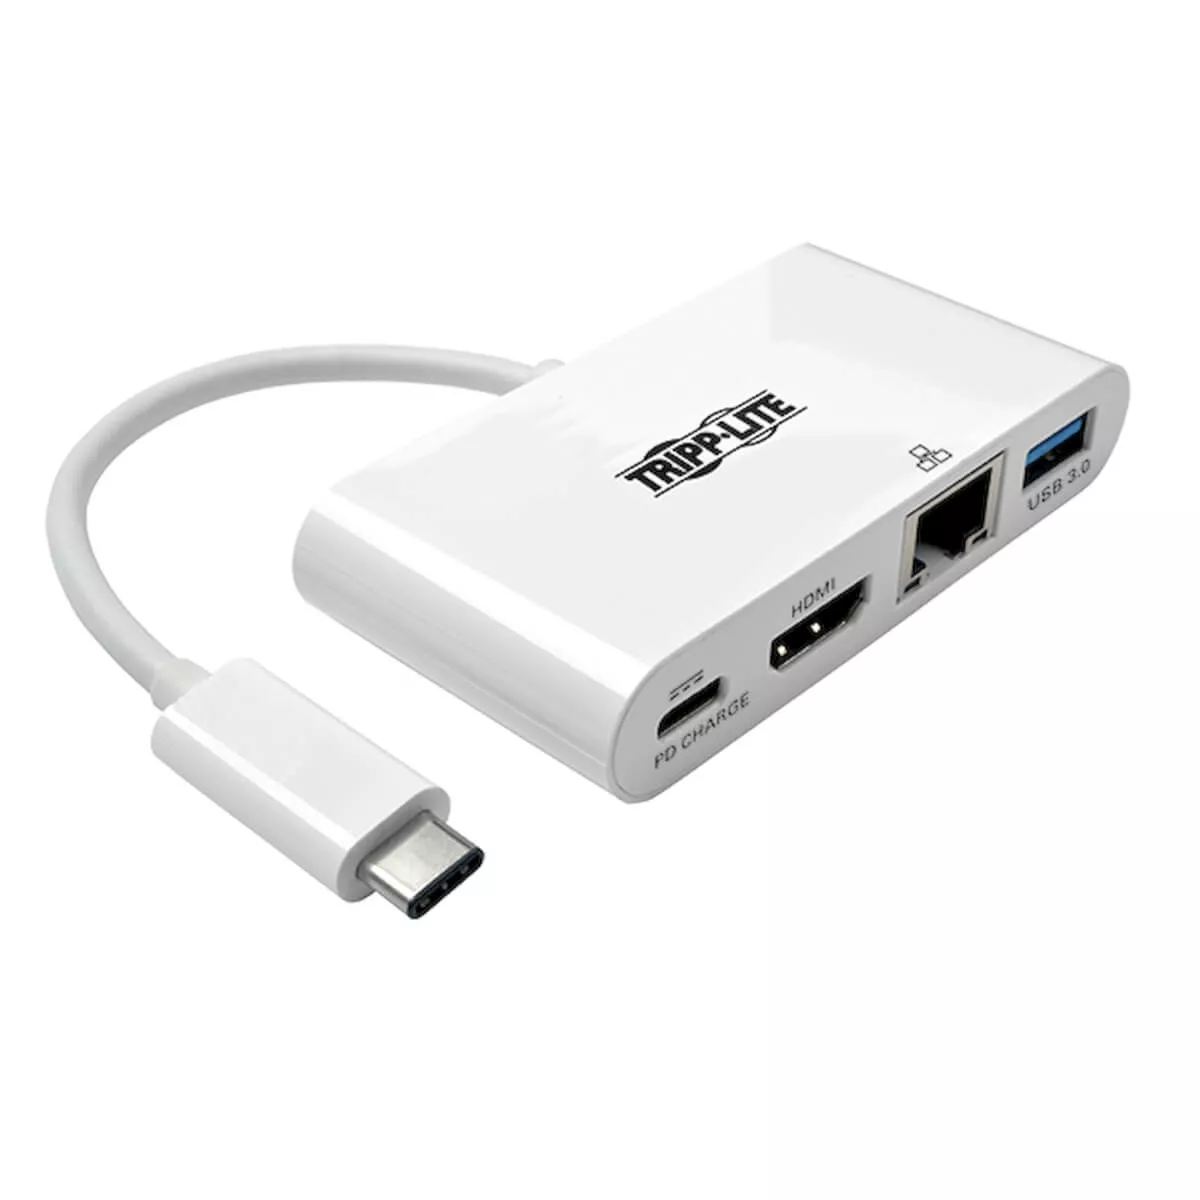 Achat EATON TRIPPLITE USB-C Multiport Adapter - HDMI USB 3.0 au meilleur prix